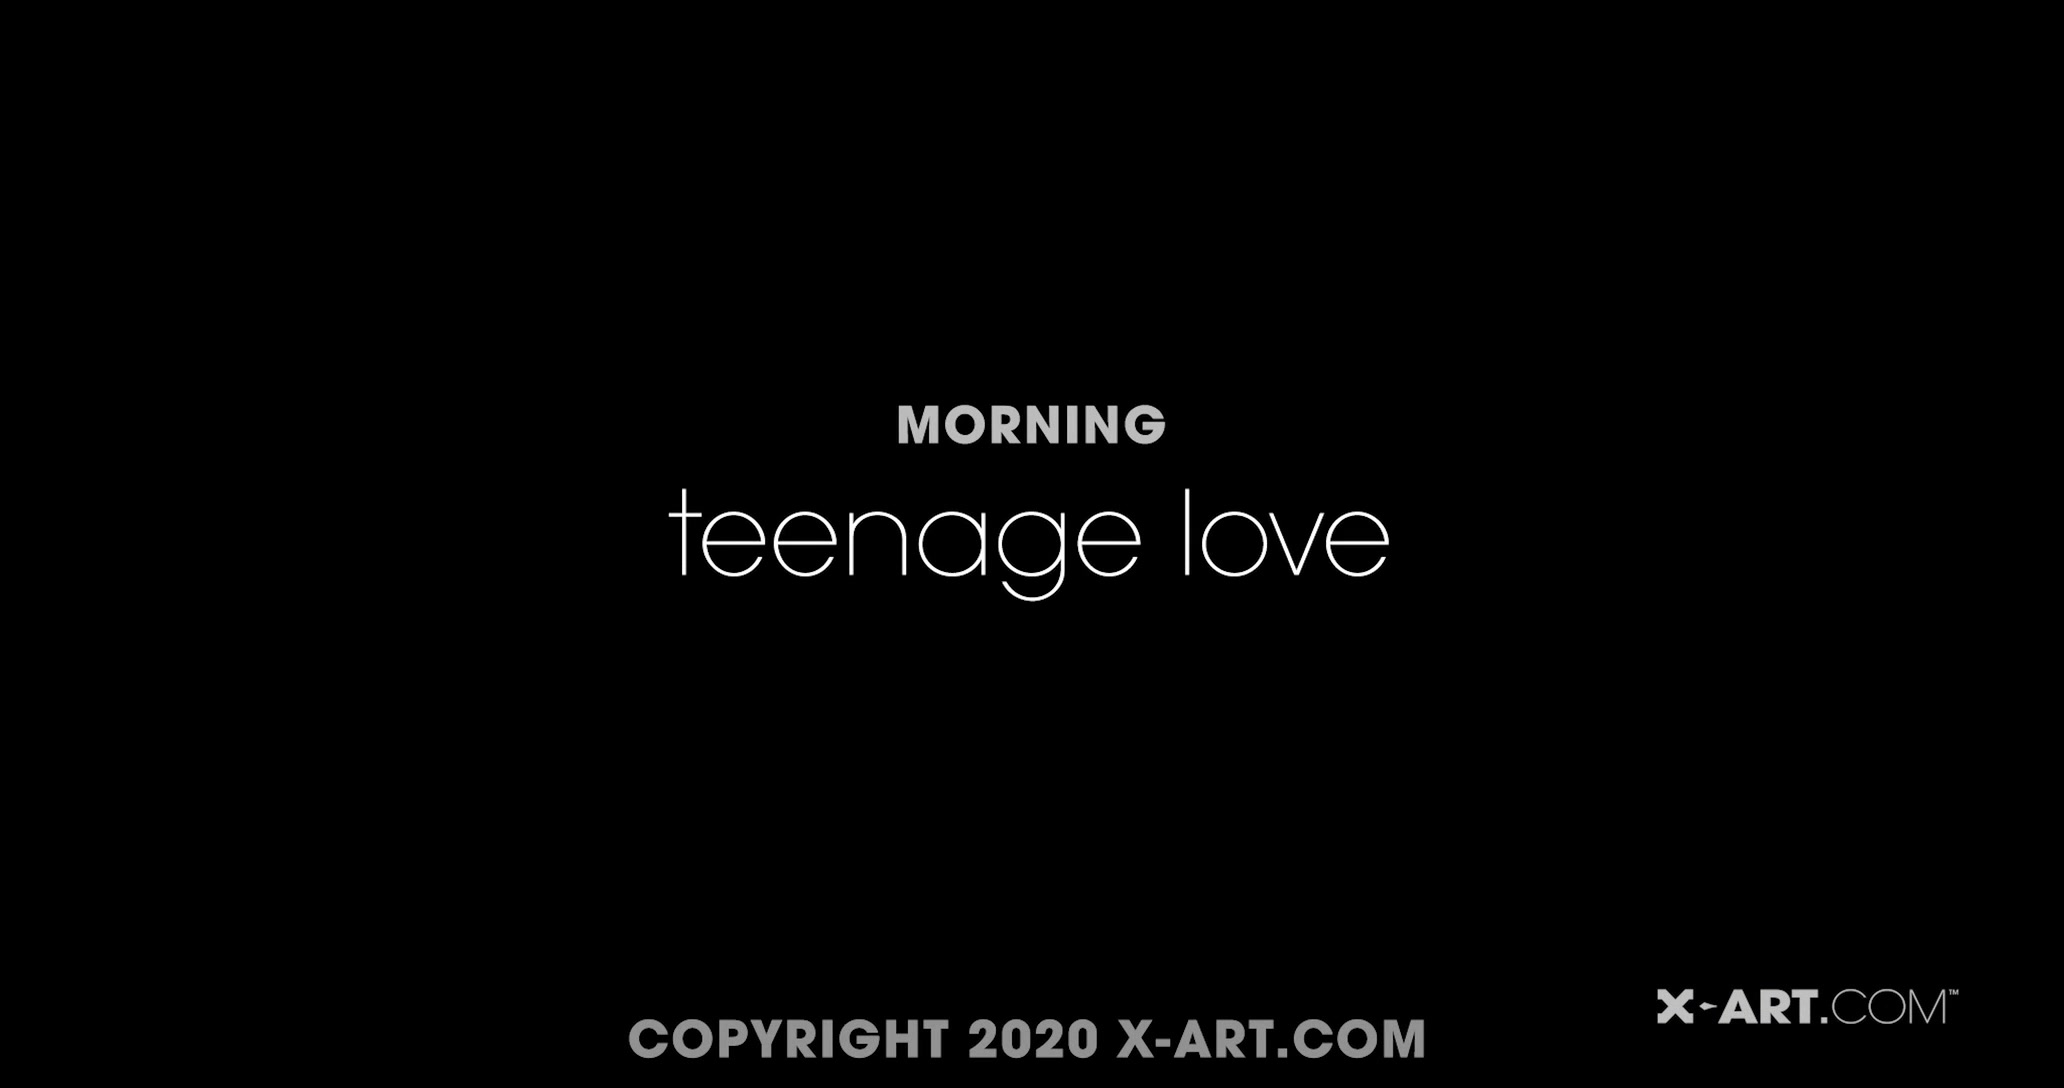 X-Art - Eveline - Morning Teenage Love